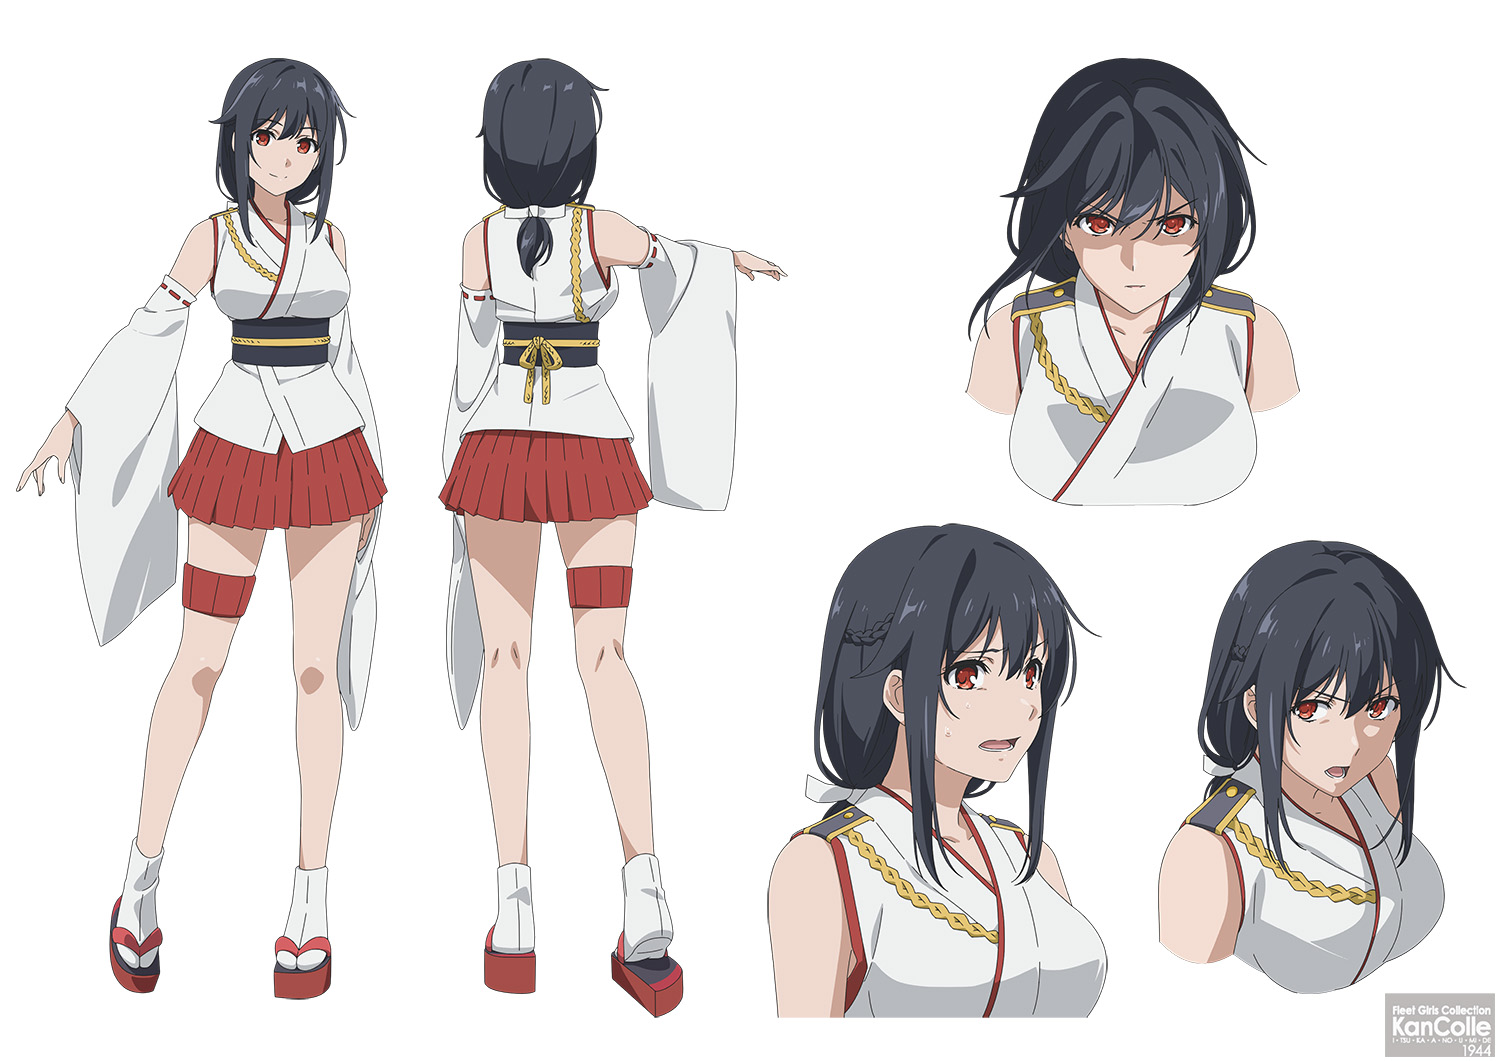 Character settings of Yamashiro - a dreadnought class fleet girl - from the upcoming KanColle: ITSUKA ANO UMI DE TV anime.